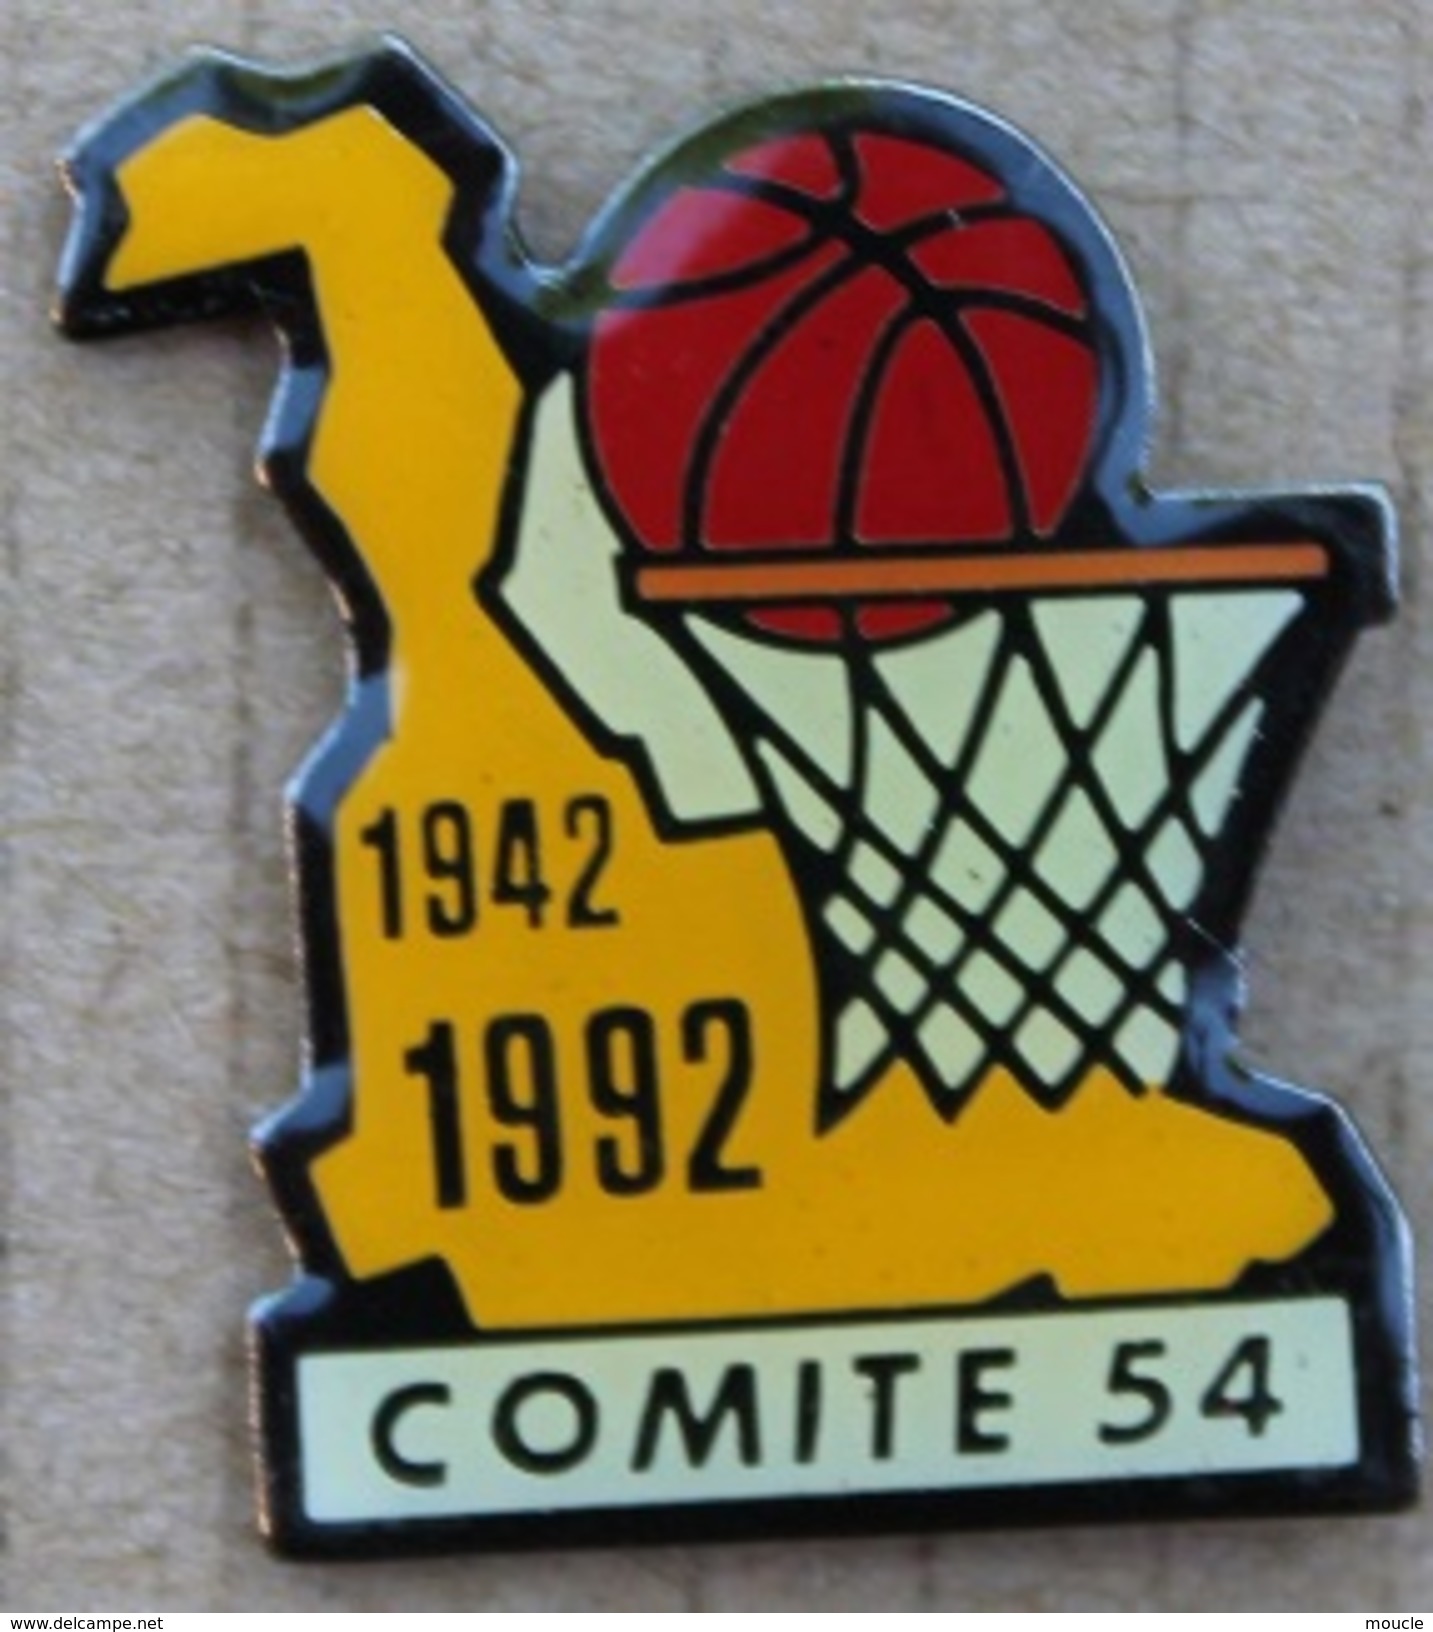 BASKETBALL - PANIER - BALLON - 50 ANS COMITE 54 - 1942 / 1992 - DEPARTEMENT FRANCAIS - FRANCE -                  (JAUNE) - Basketball